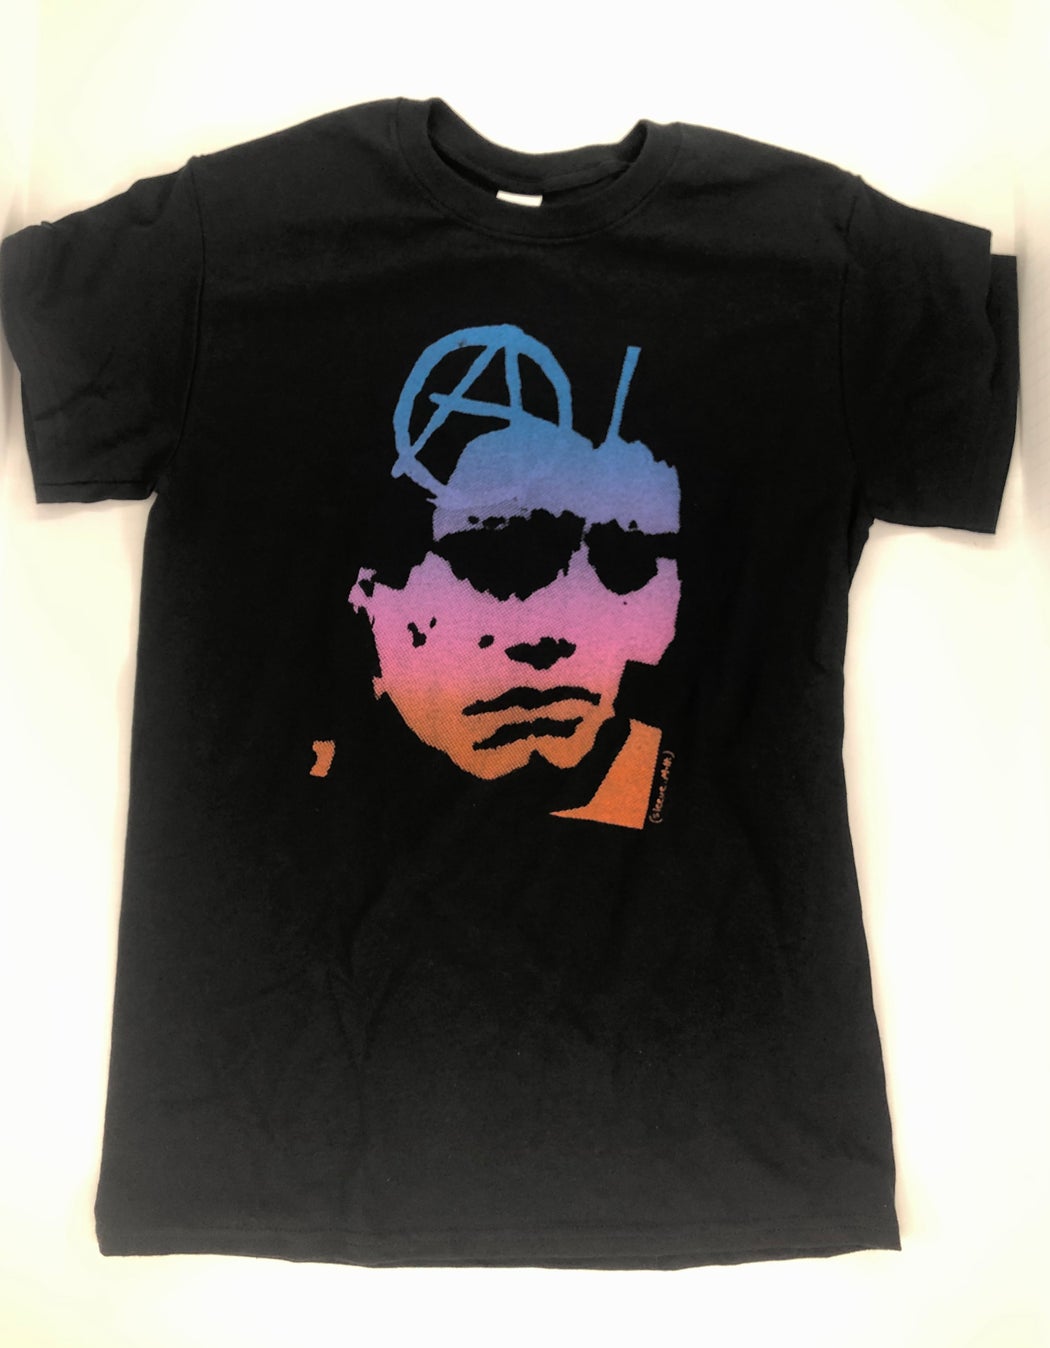 "A-Face / Nuclear Fade" T-Shirt